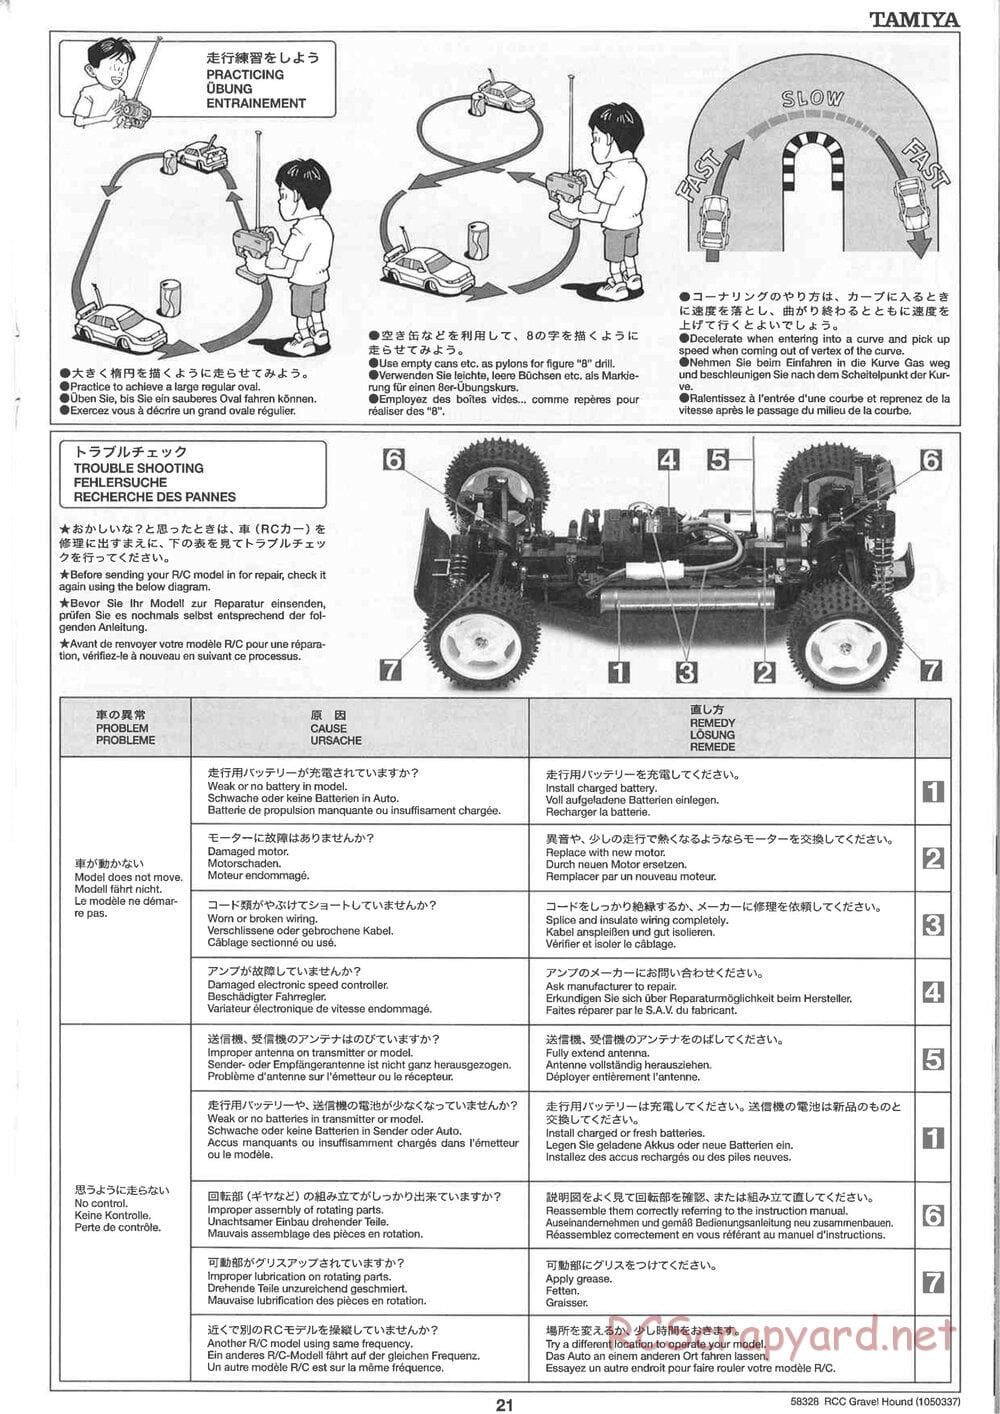 Tamiya - Gravel Hound Chassis - Manual - Page 21